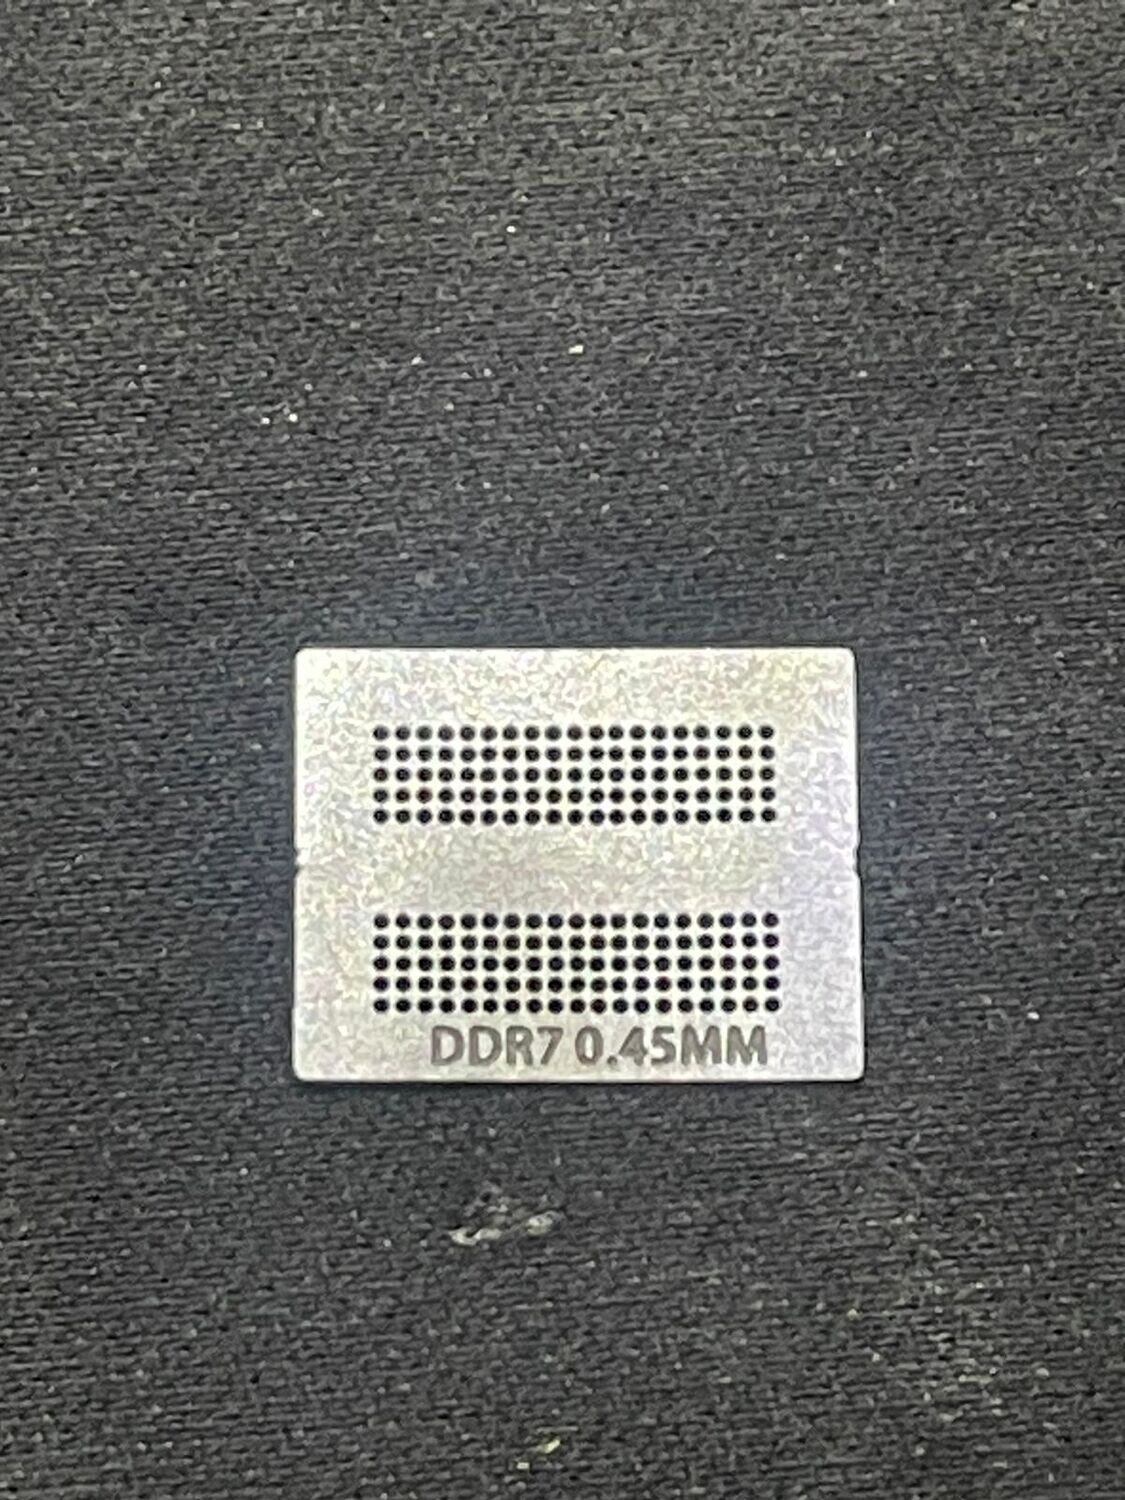 Трафарет BGA DDR7 0.45